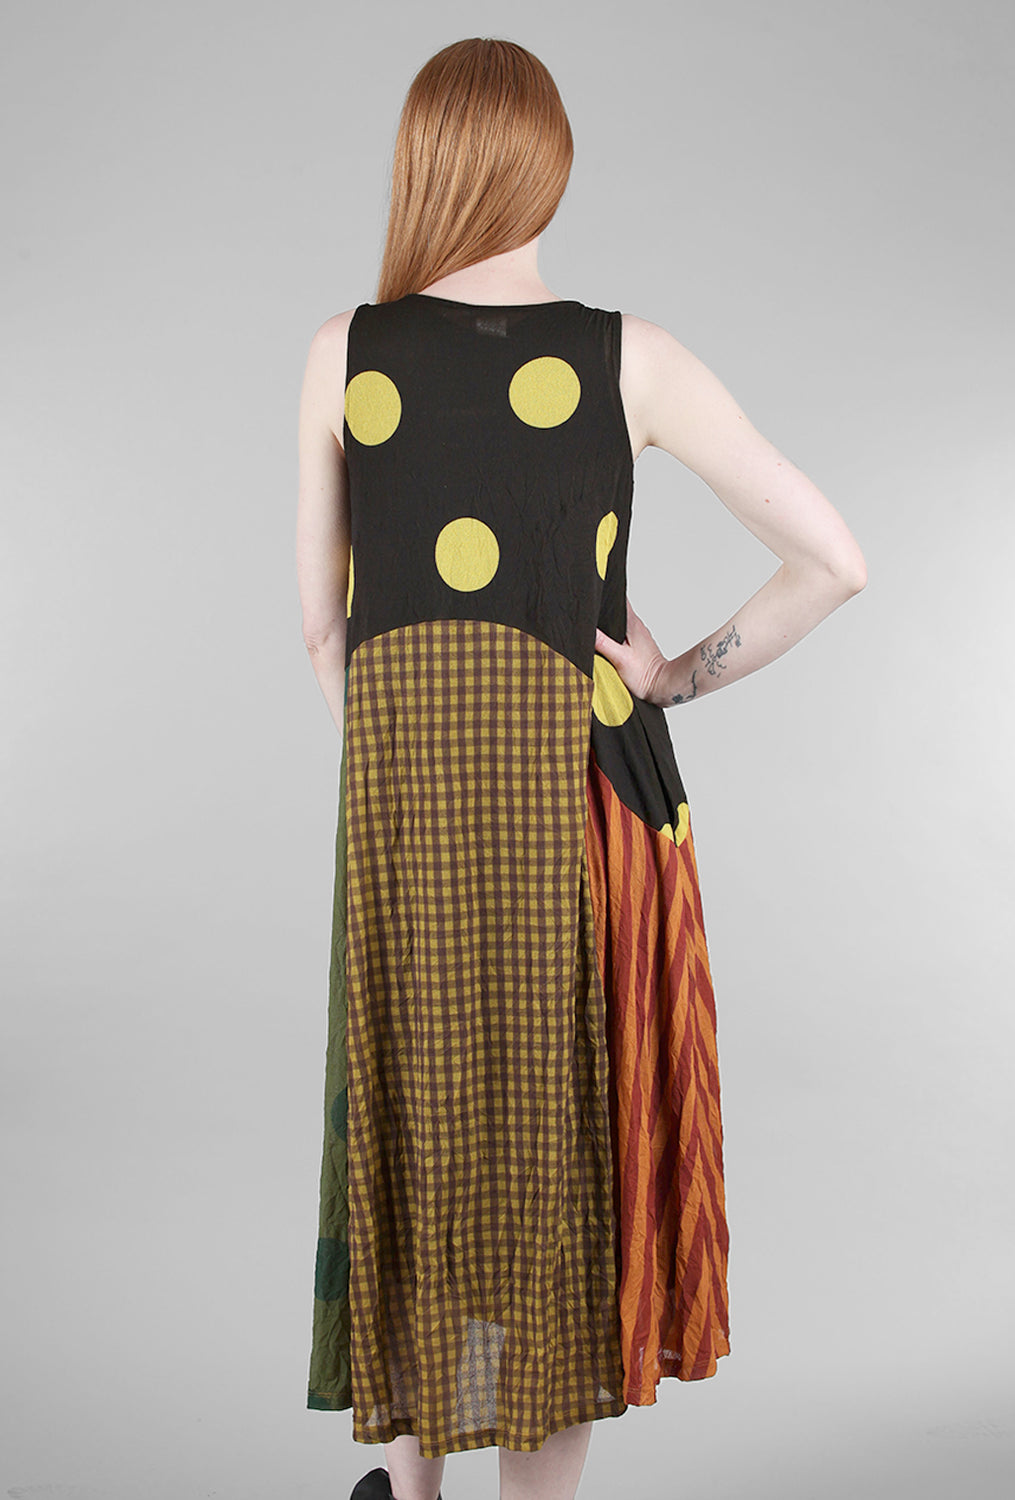 Alembika Stripes & Dots Crinkle Tank Dress, Rust Mix 